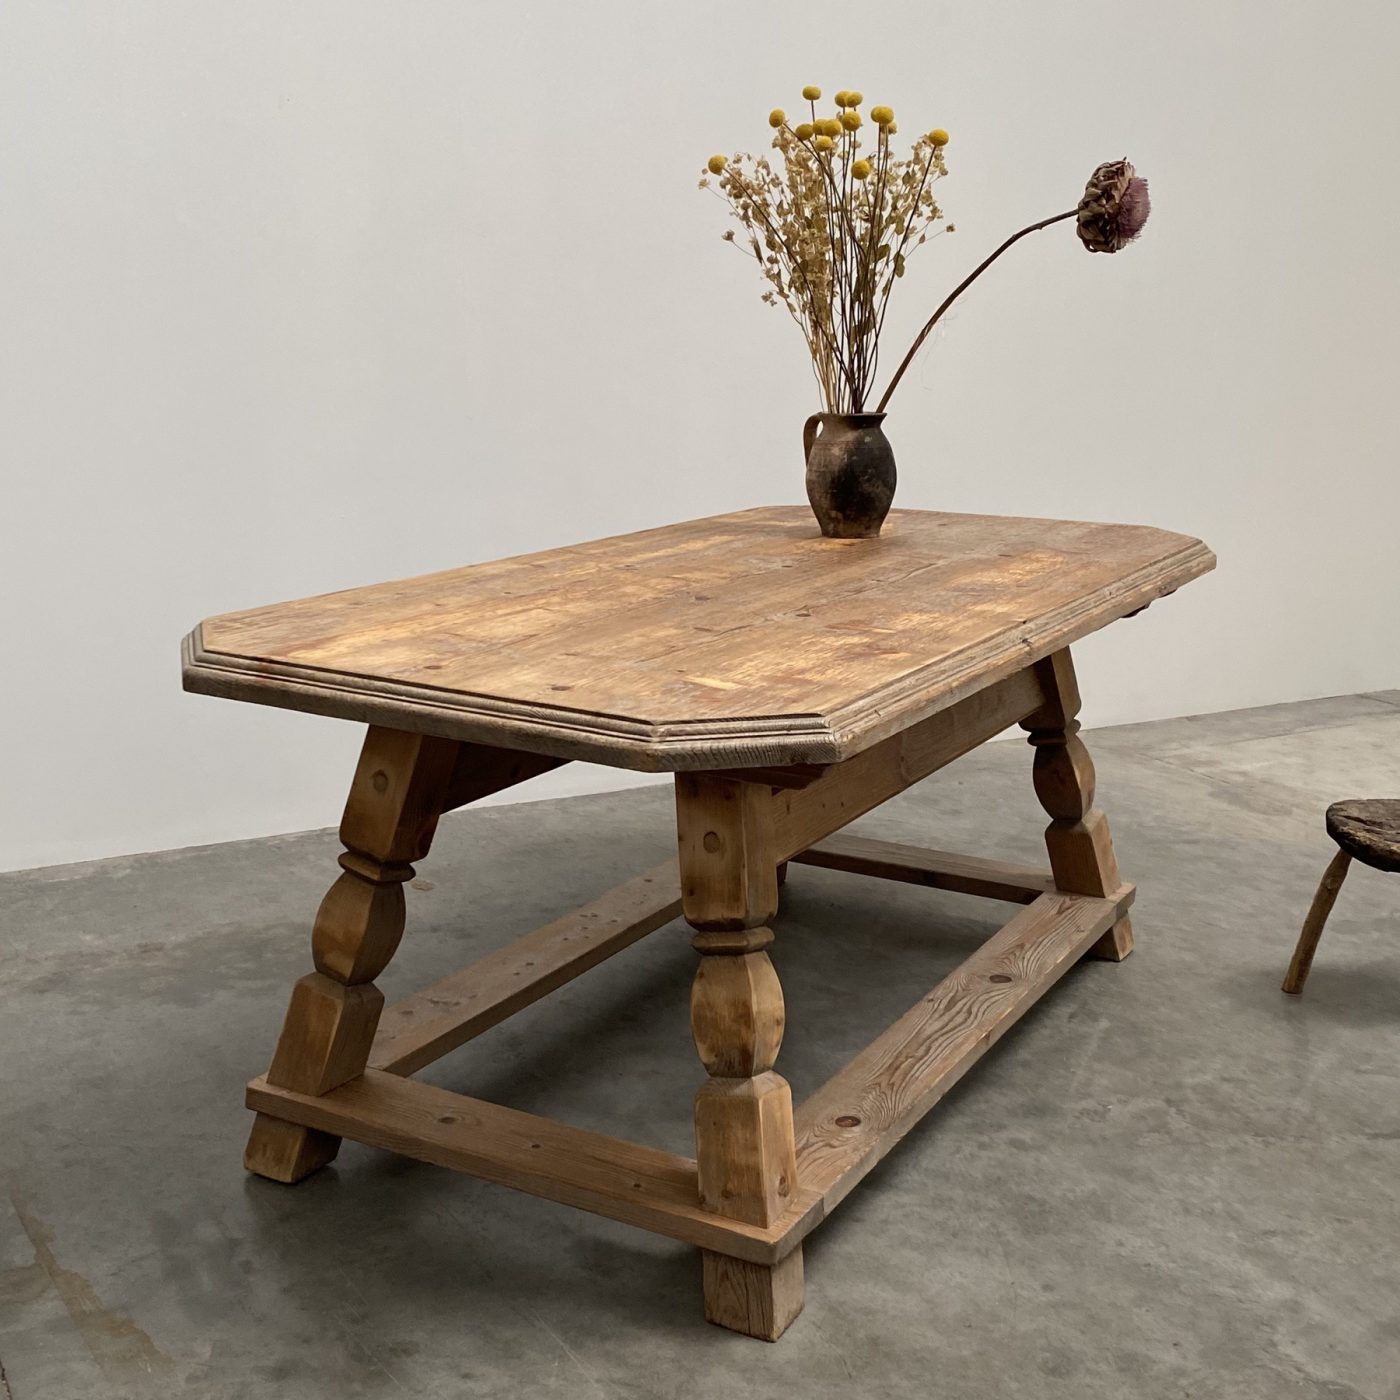 objet-vagabond-pine-table0006